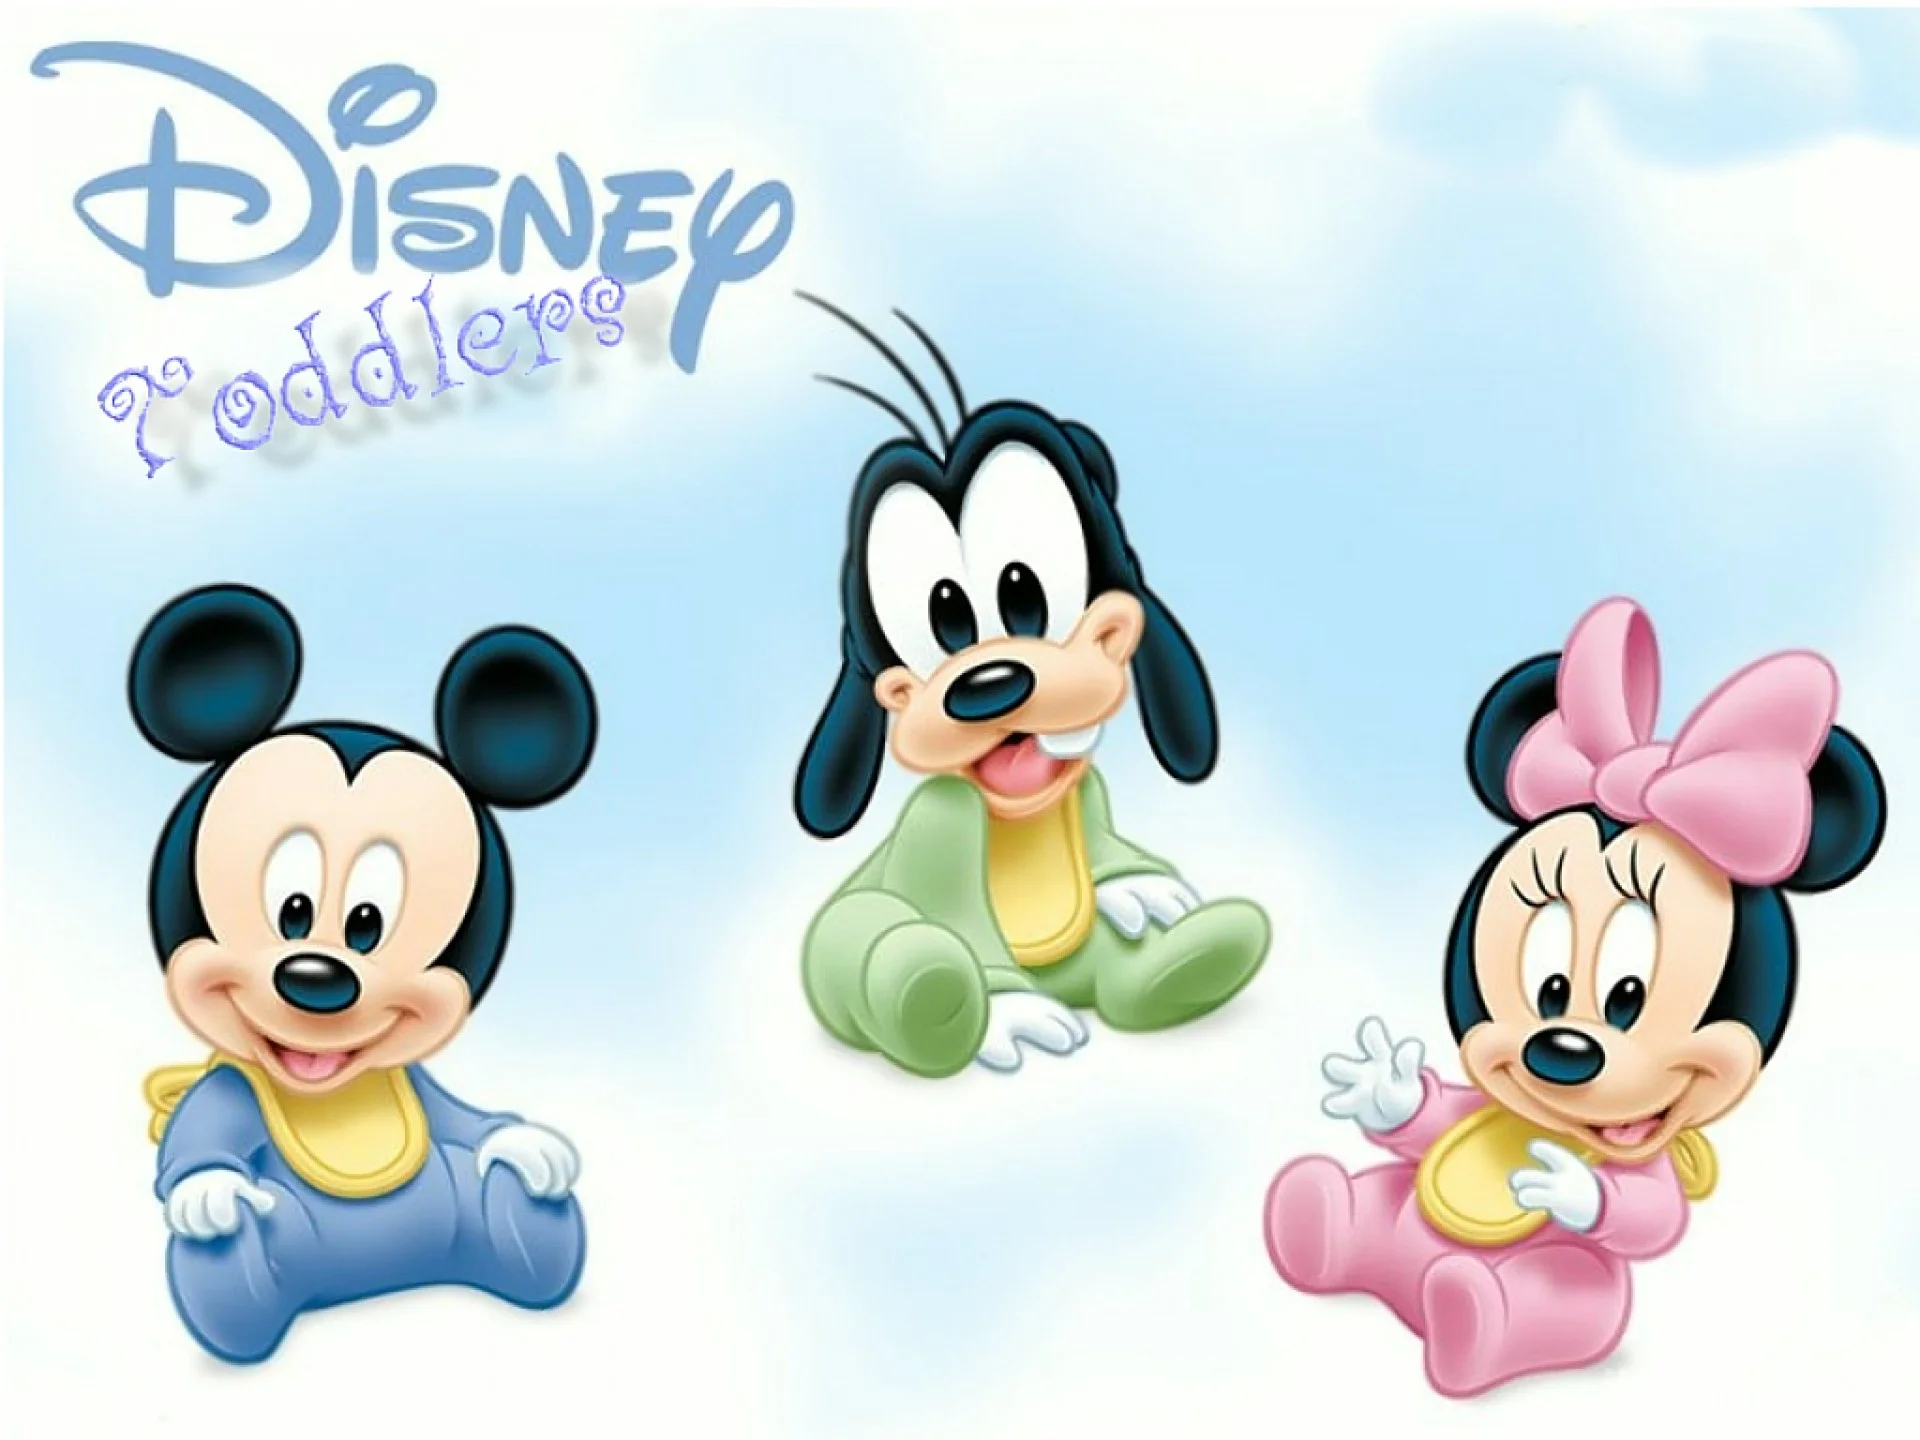 Cartoon Characters Walt Disney Wallpaper Deskt Wallpaper